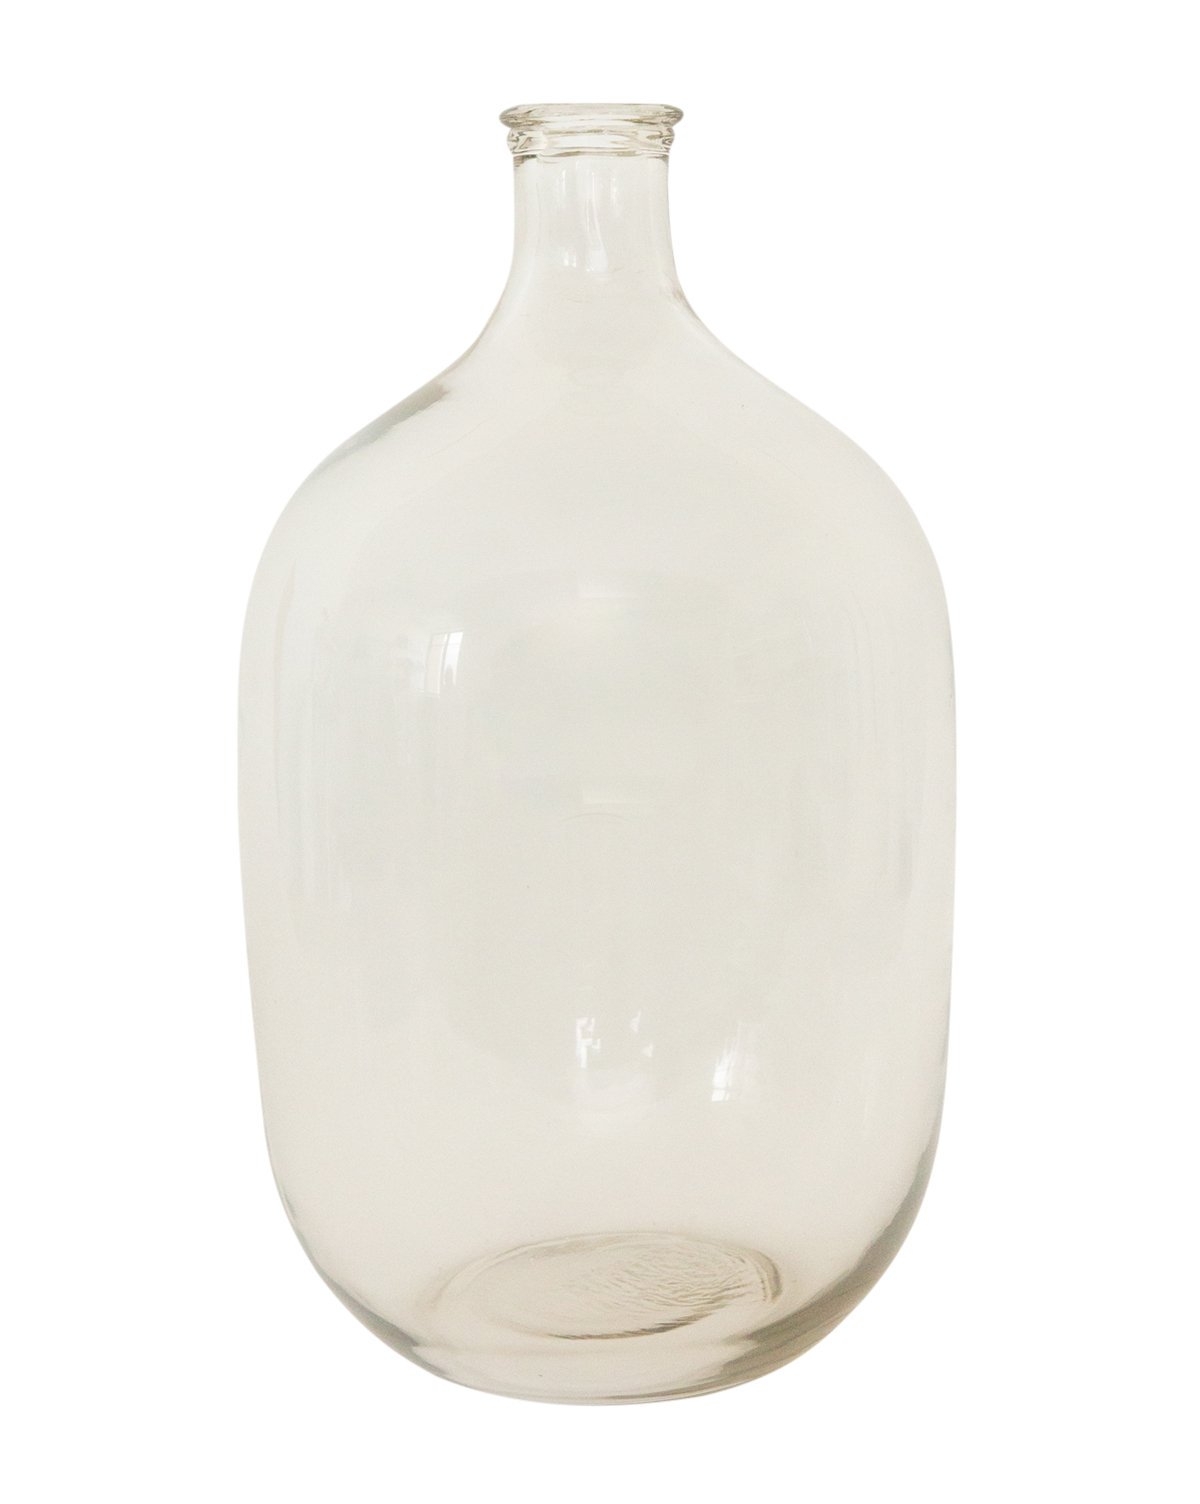 Tara Glass Bottle Vase - Image 0